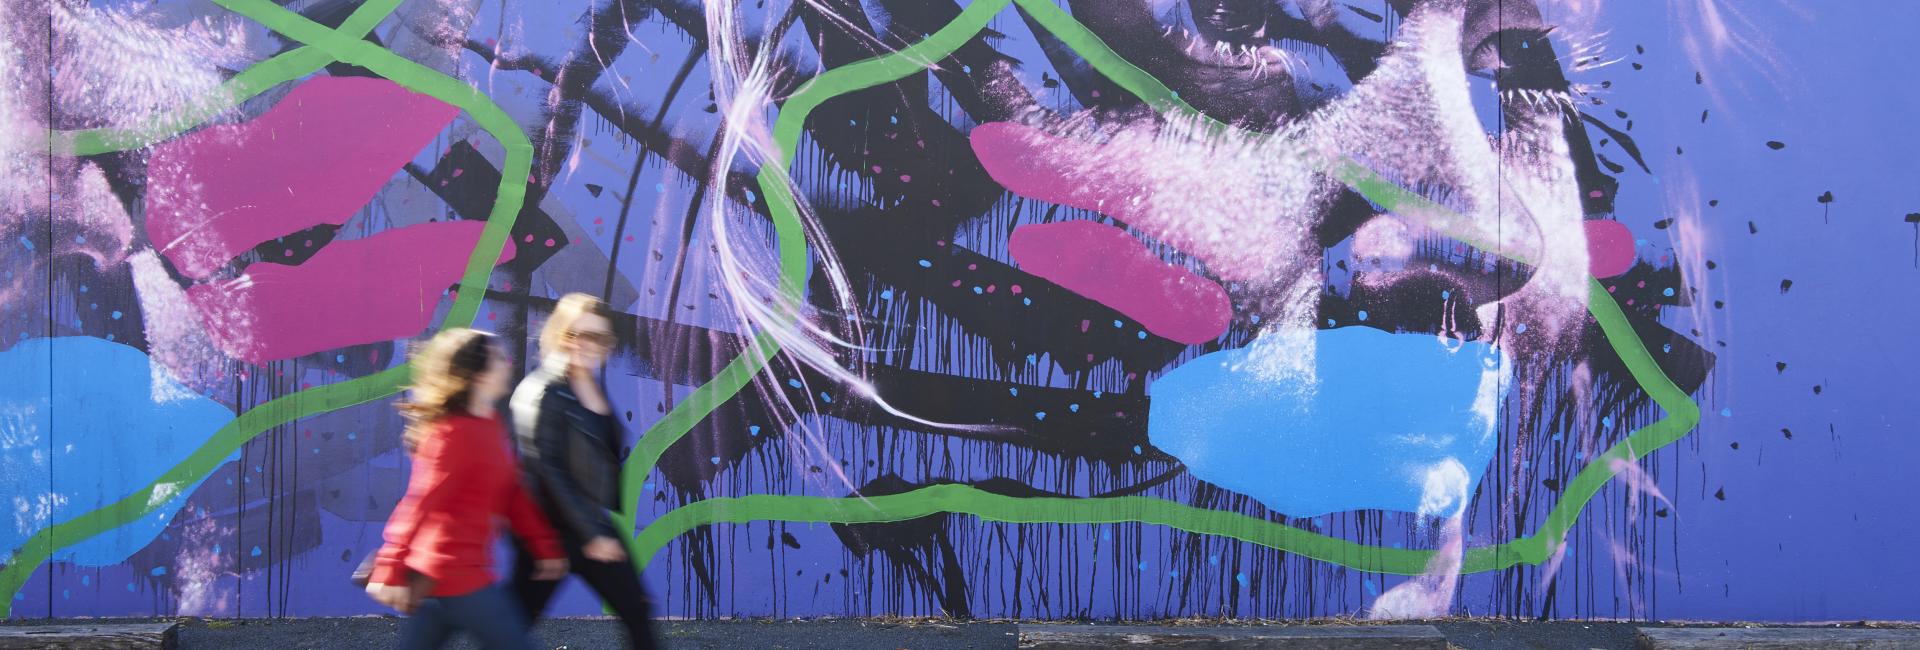 Two people walk past an outdoor street art mural in Bunbury